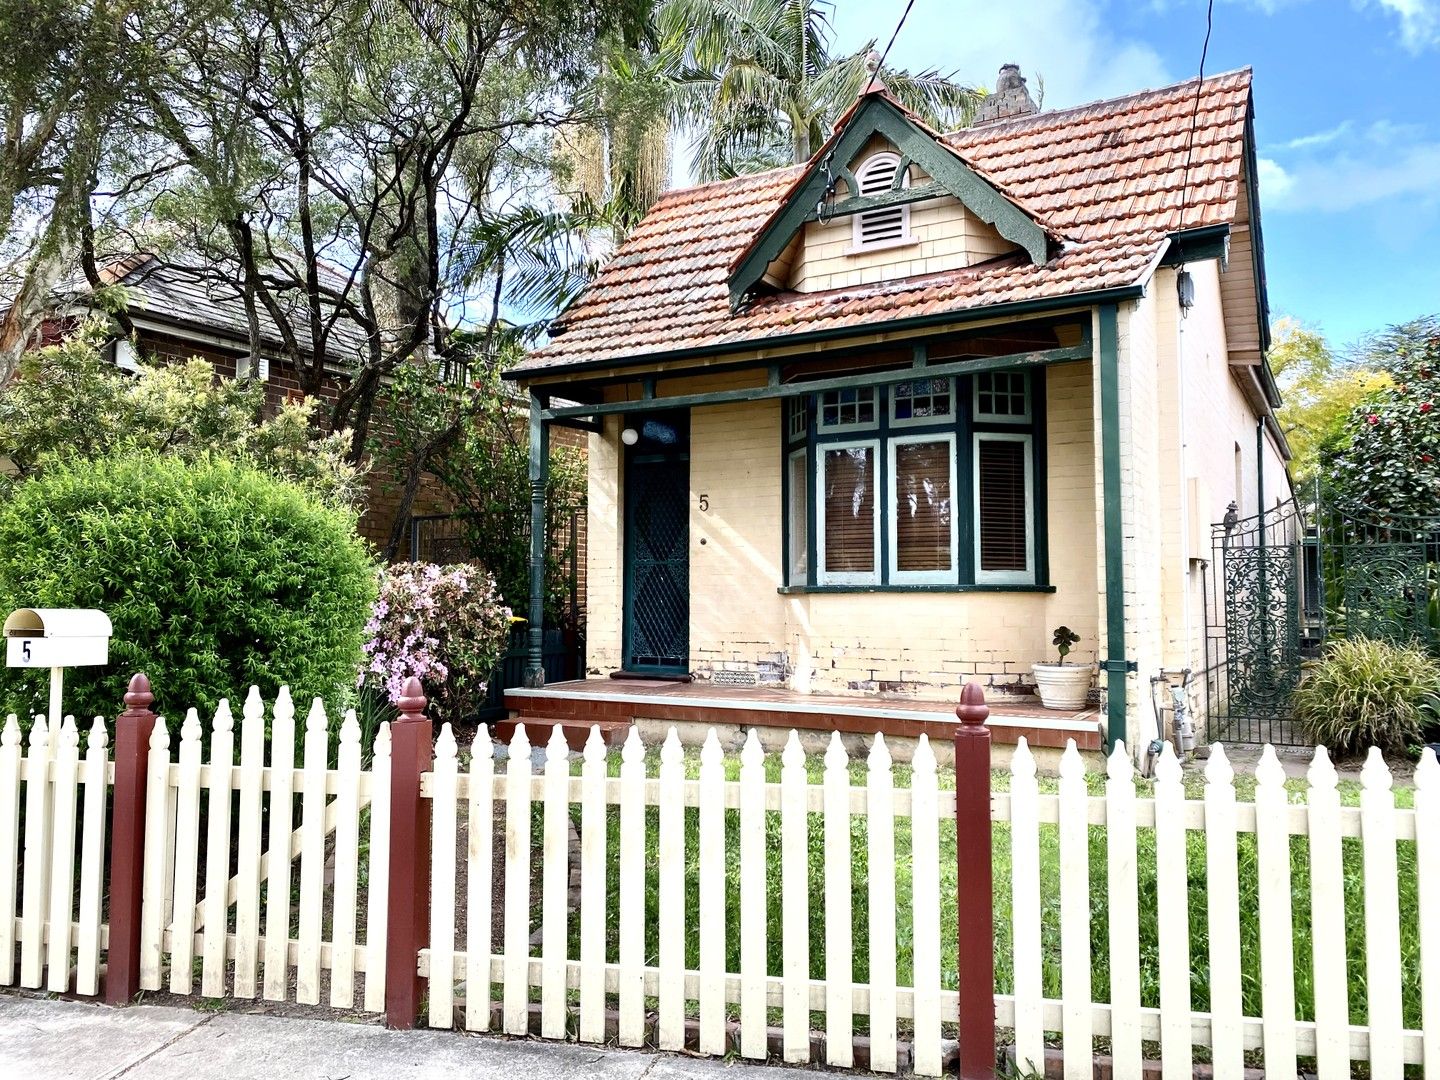 3 bedrooms House in 5 Lucy Street ASHFIELD NSW, 2131